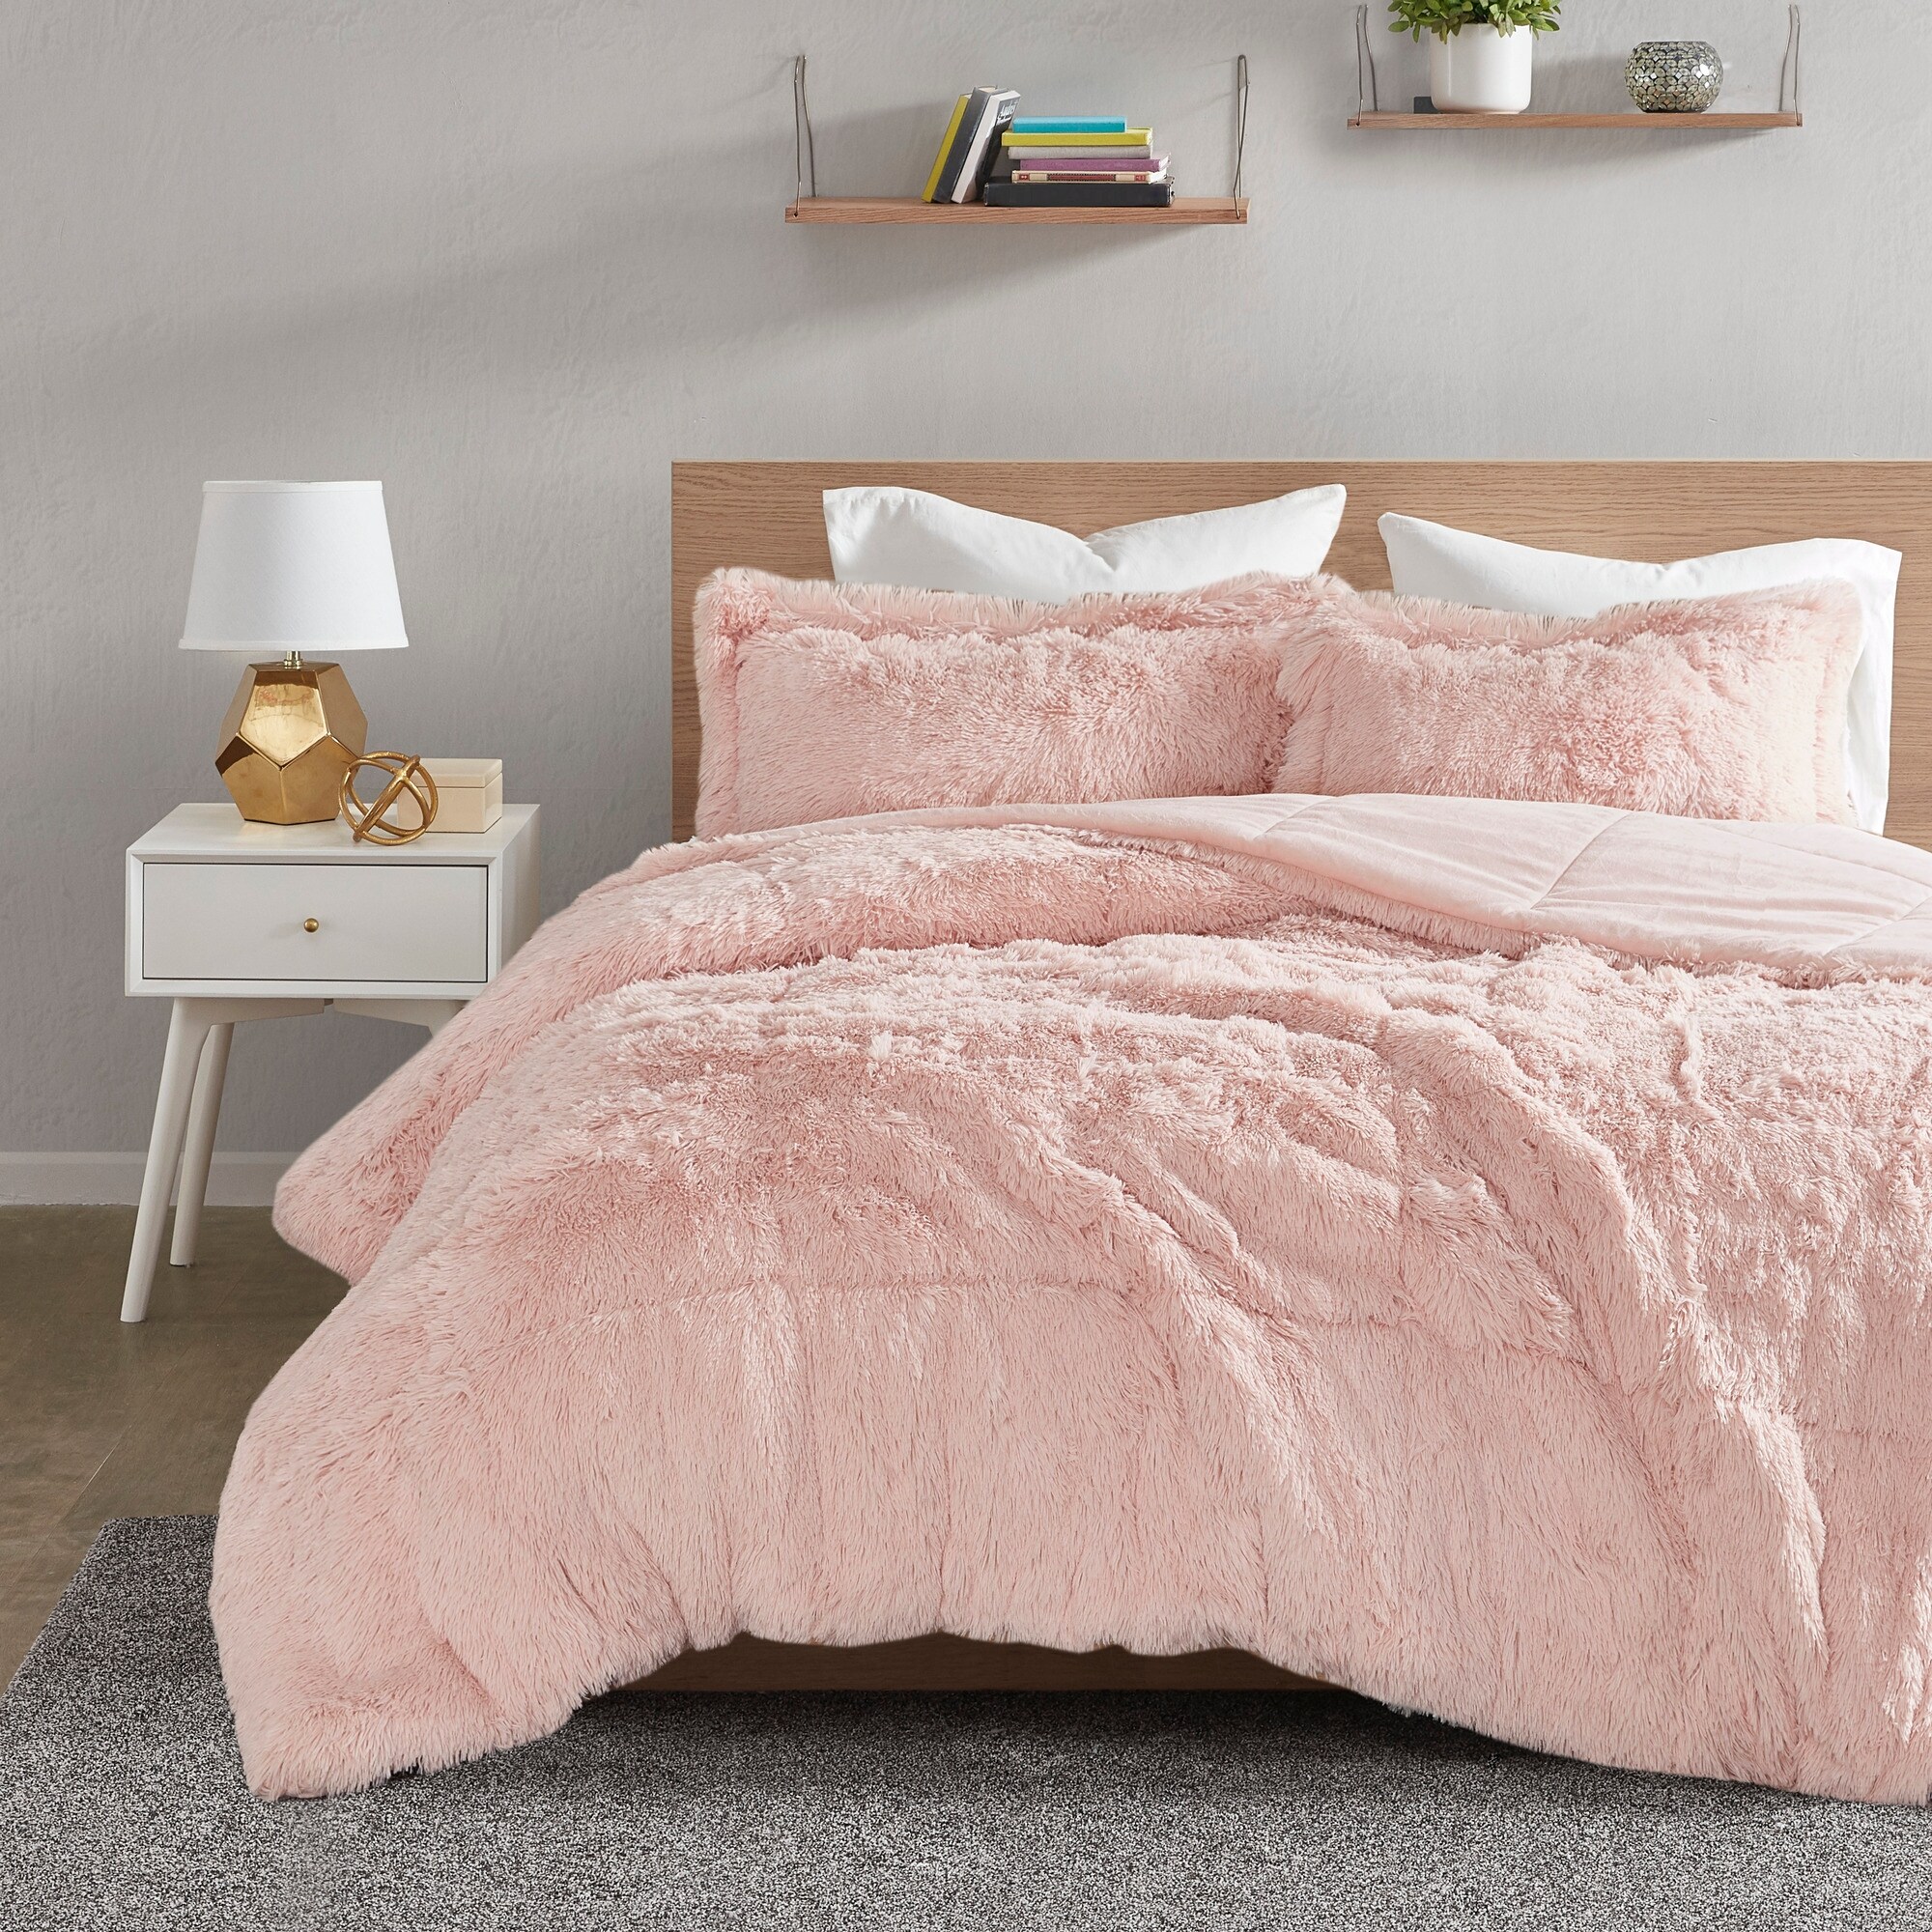 Details about   New Pink Ombre Shaggy Soft Furry Girls Bedroom Dorm Queen King Comforter Set 